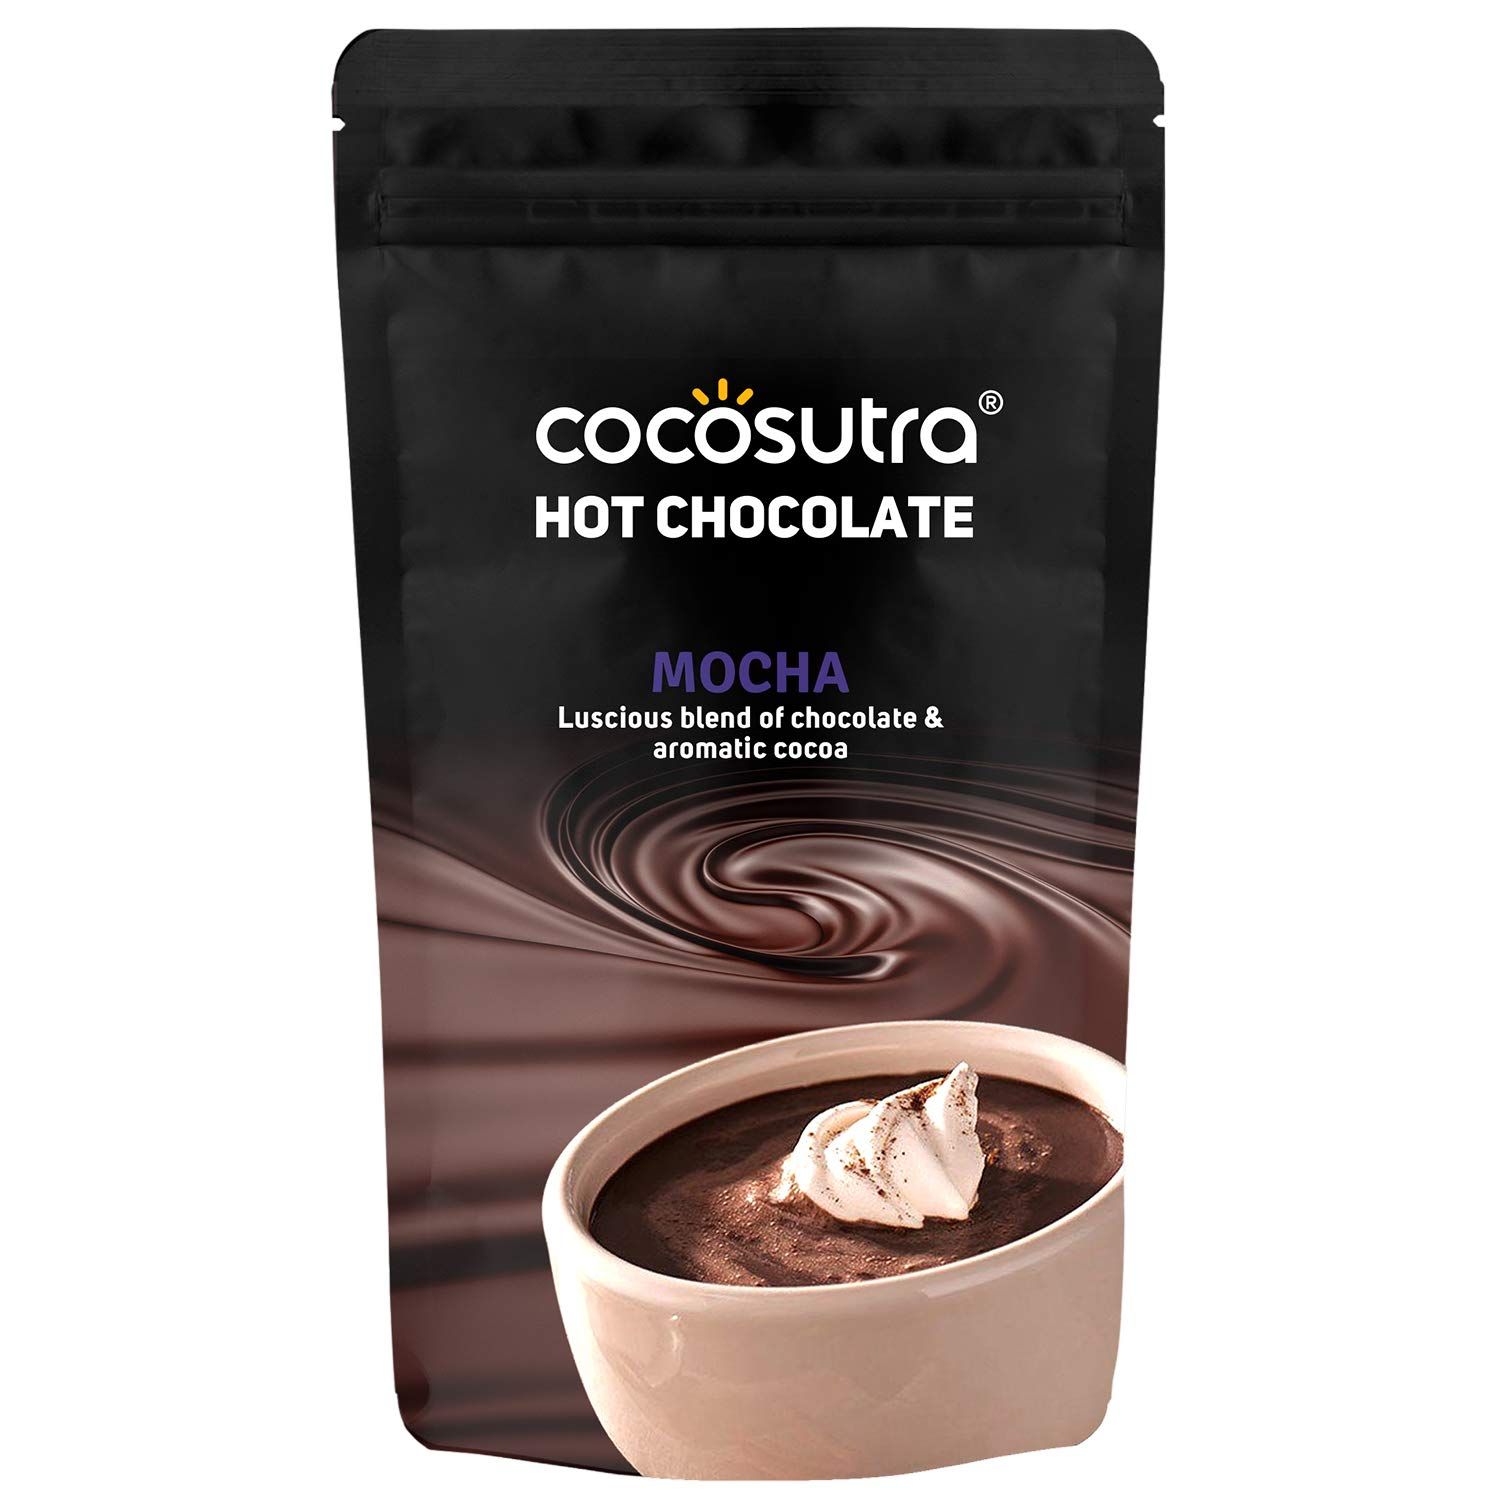 Cocosutra Hot Chocolate Mocha Image